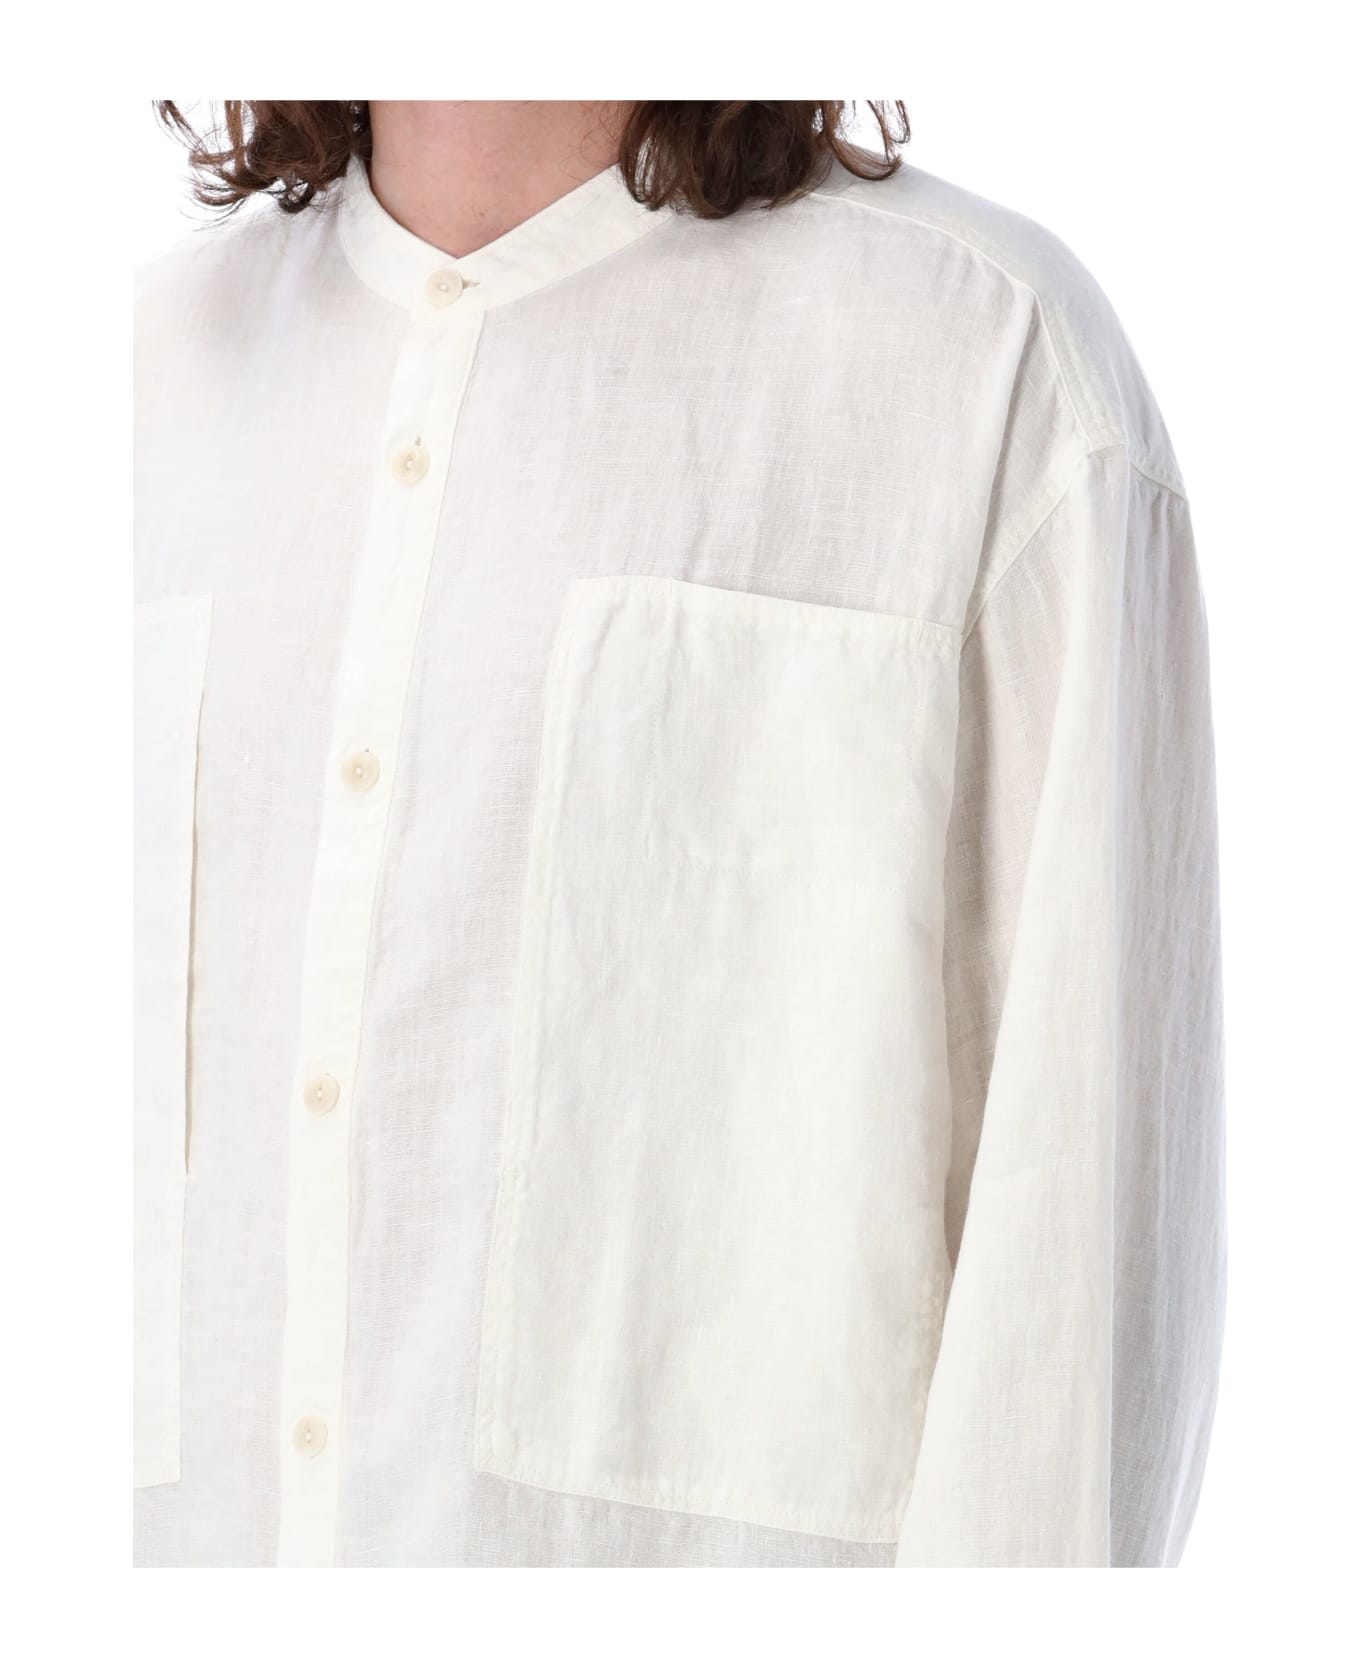 YMC Hawkeye Shirt - WHITE